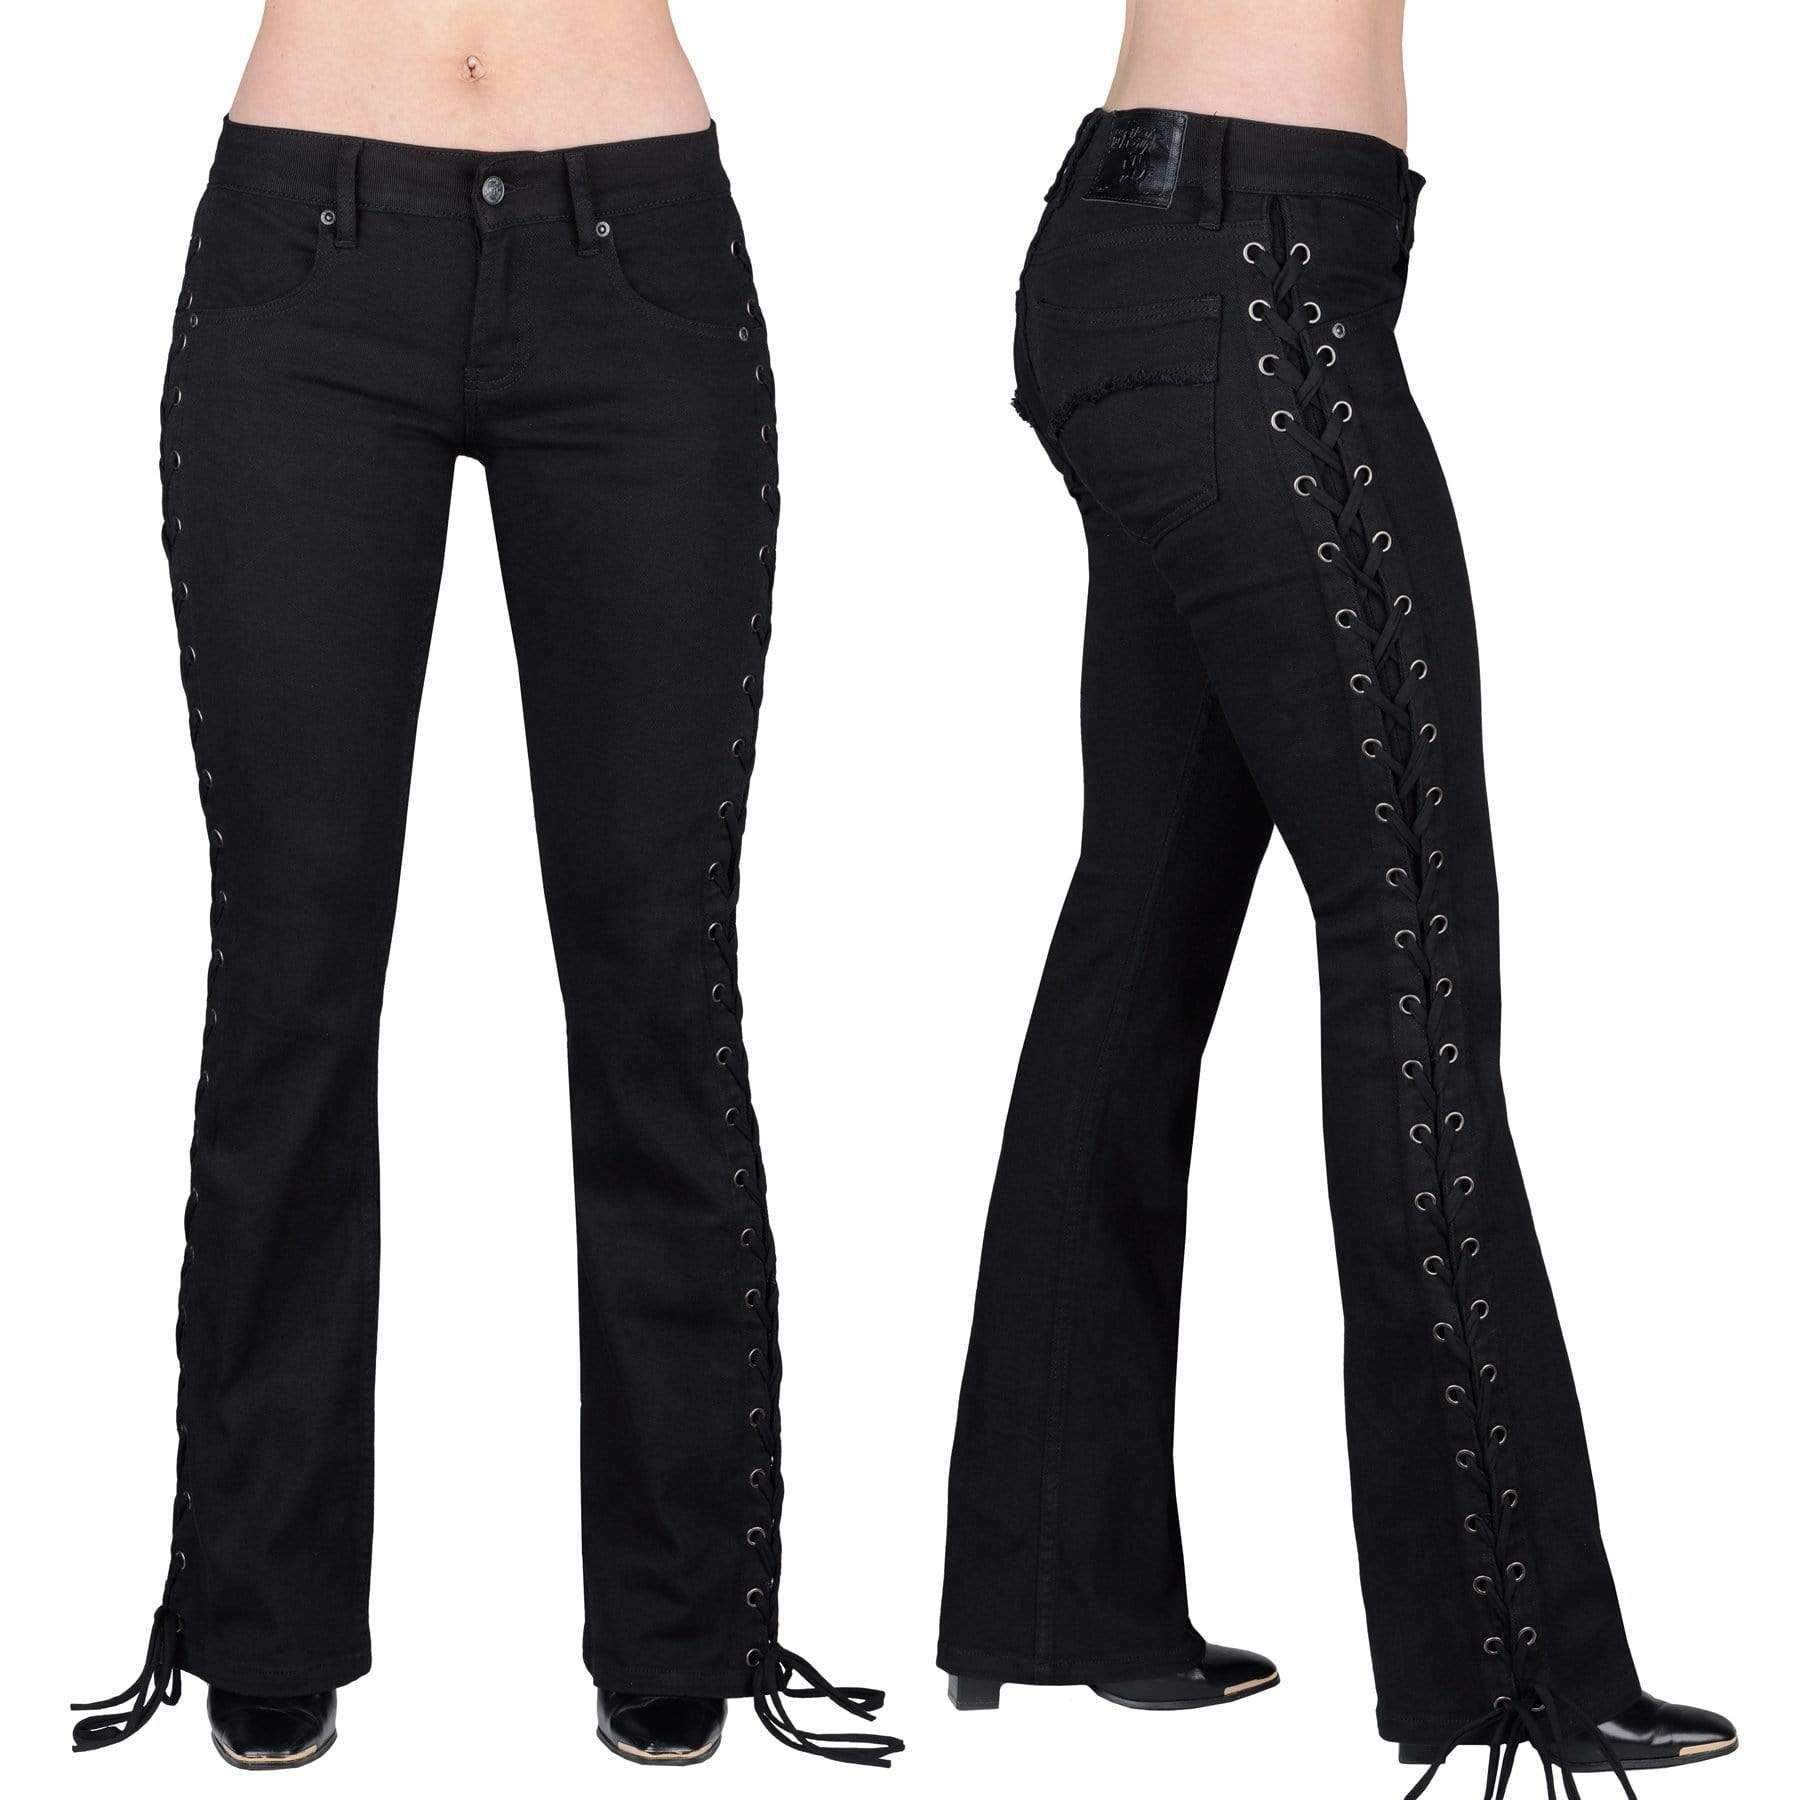 Wornstar Clothing Pants Hellraiser Side Laced Unisex Jeans - Black